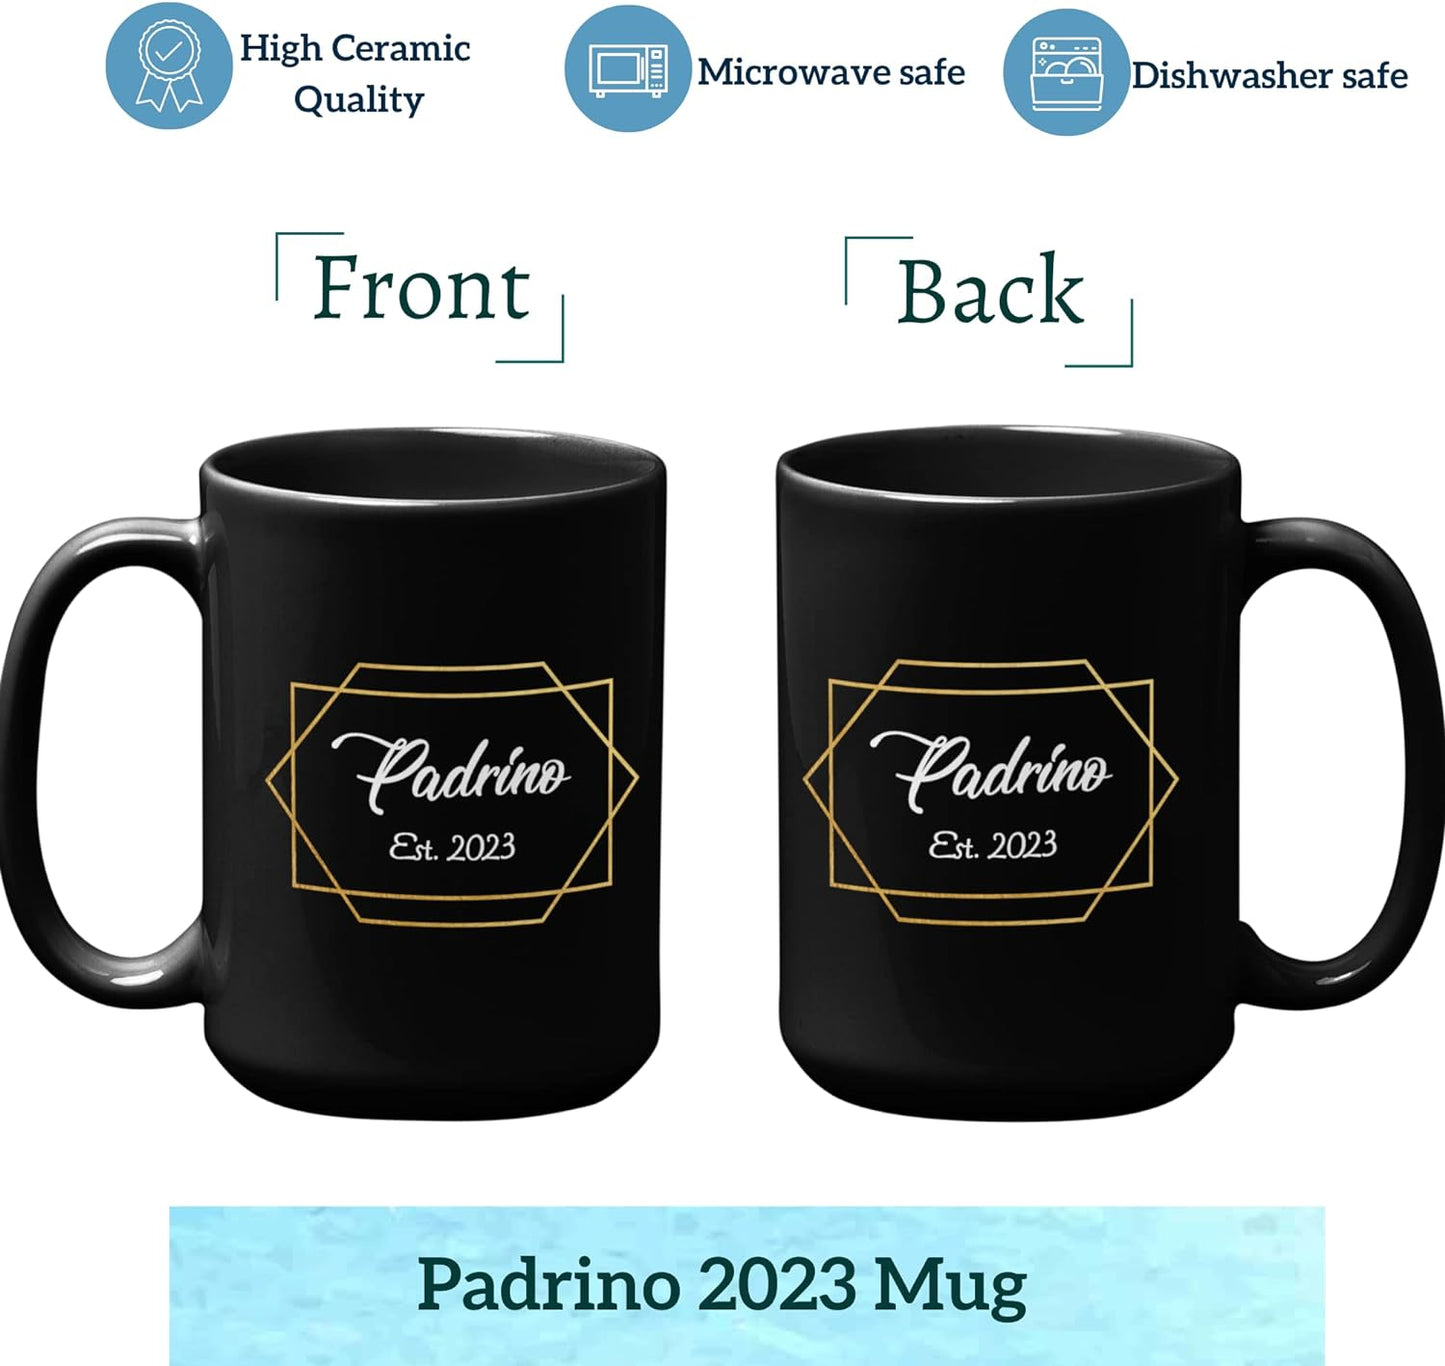 Padrino Madrina Coffee Mugs, God Parents Presents Proposal, Padrinos De Bautizo Propuesta Gifts, Madrina Padrinos Proposal Spanish Mug Set, Godfather Announcement Gift, Godparents Proposal Gift